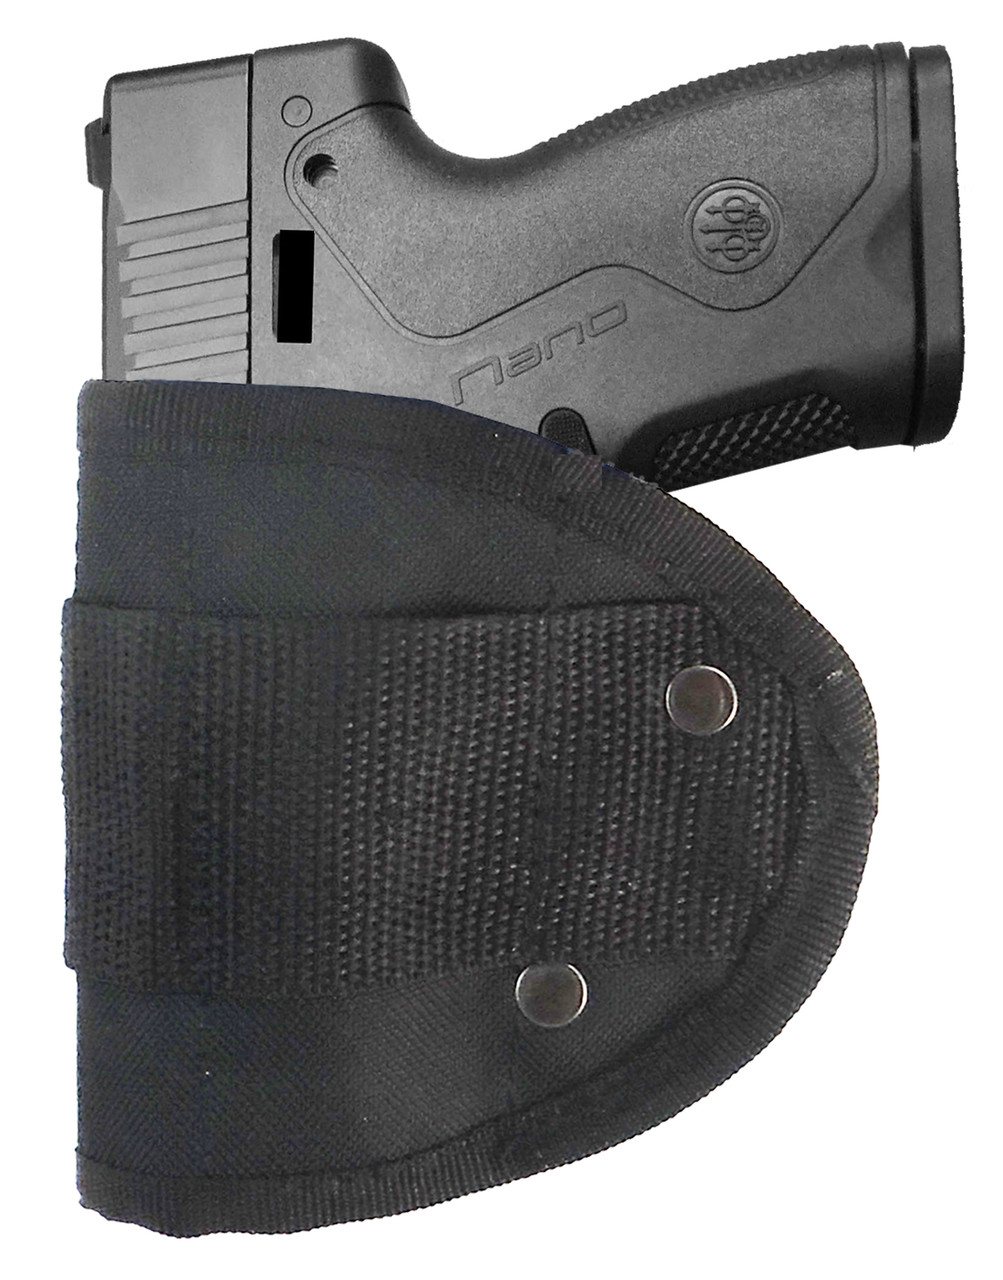 USA Mfg Pocket conceal Pistol Holster Beretta Pico .380 380 Inside Pants Waist